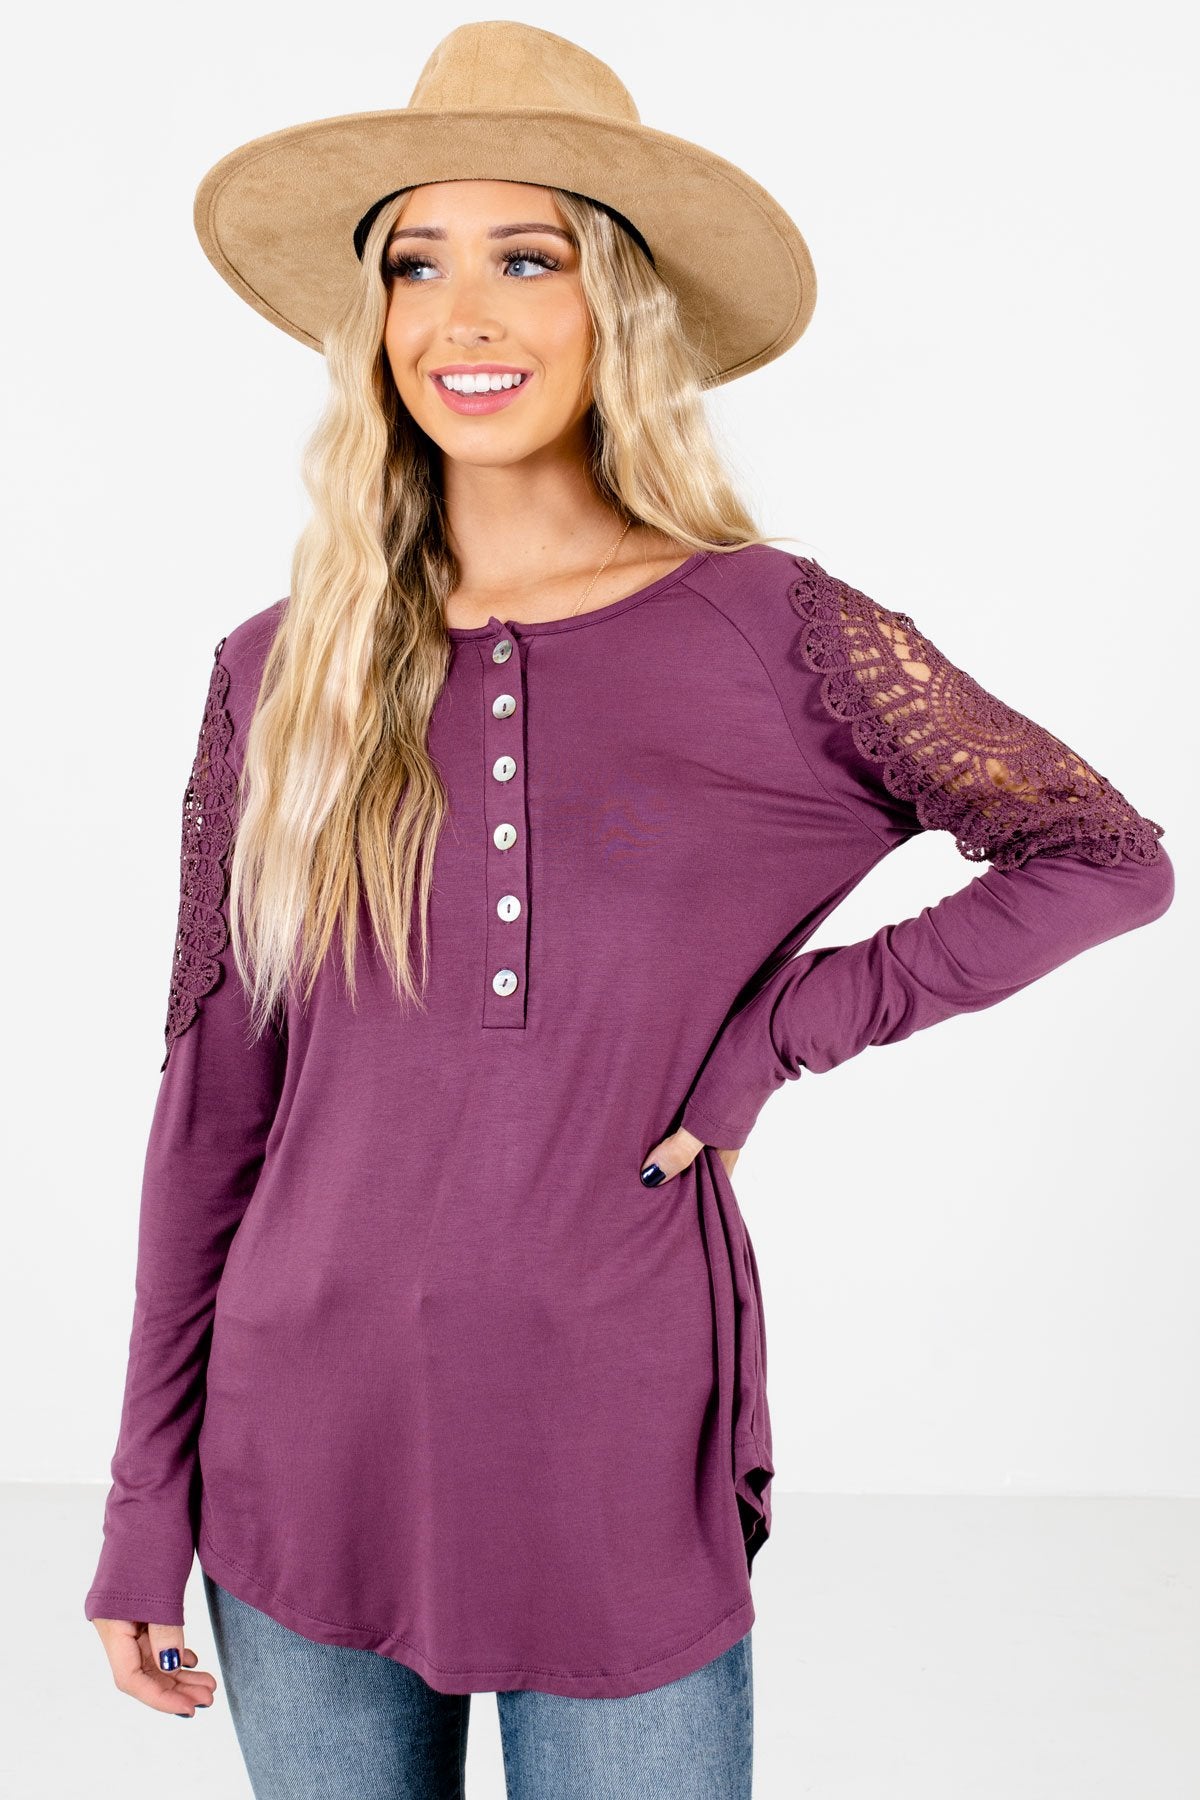 Purple Crochet Detailed Boutique Tops for Women